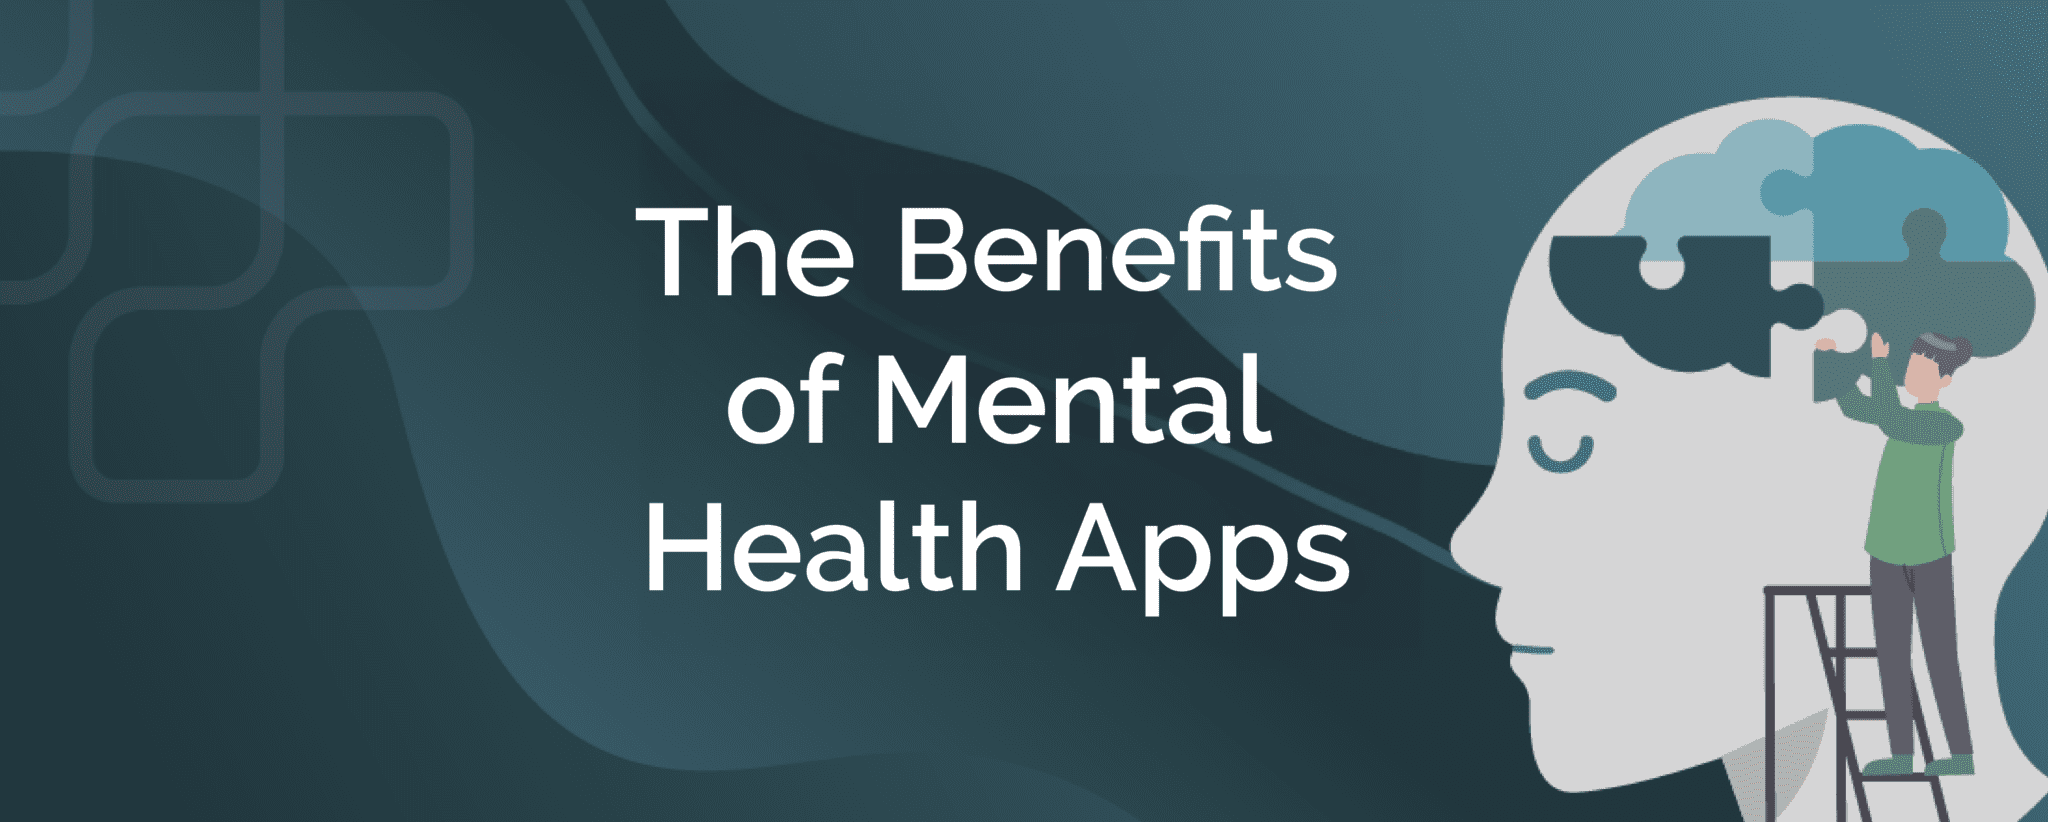 benefits of mental health apps